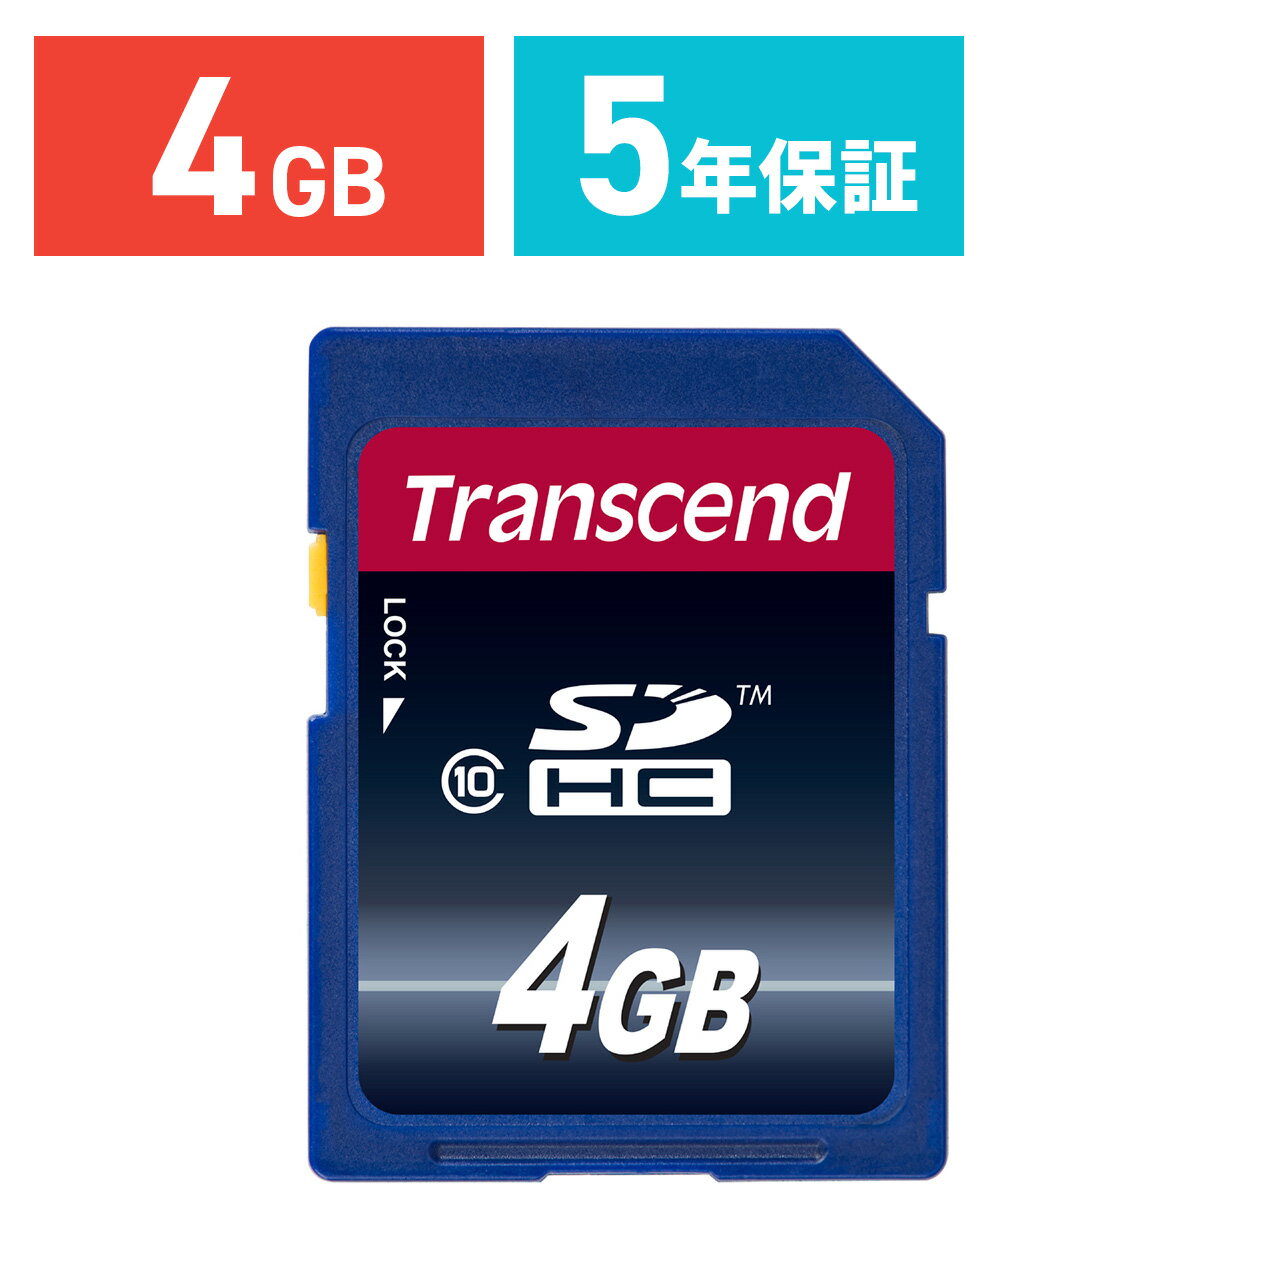 y5/15II100|CgҌ zTranscend SDJ[h 4GB Class10 SDHC 5Nۏ [J[h NX10 w 